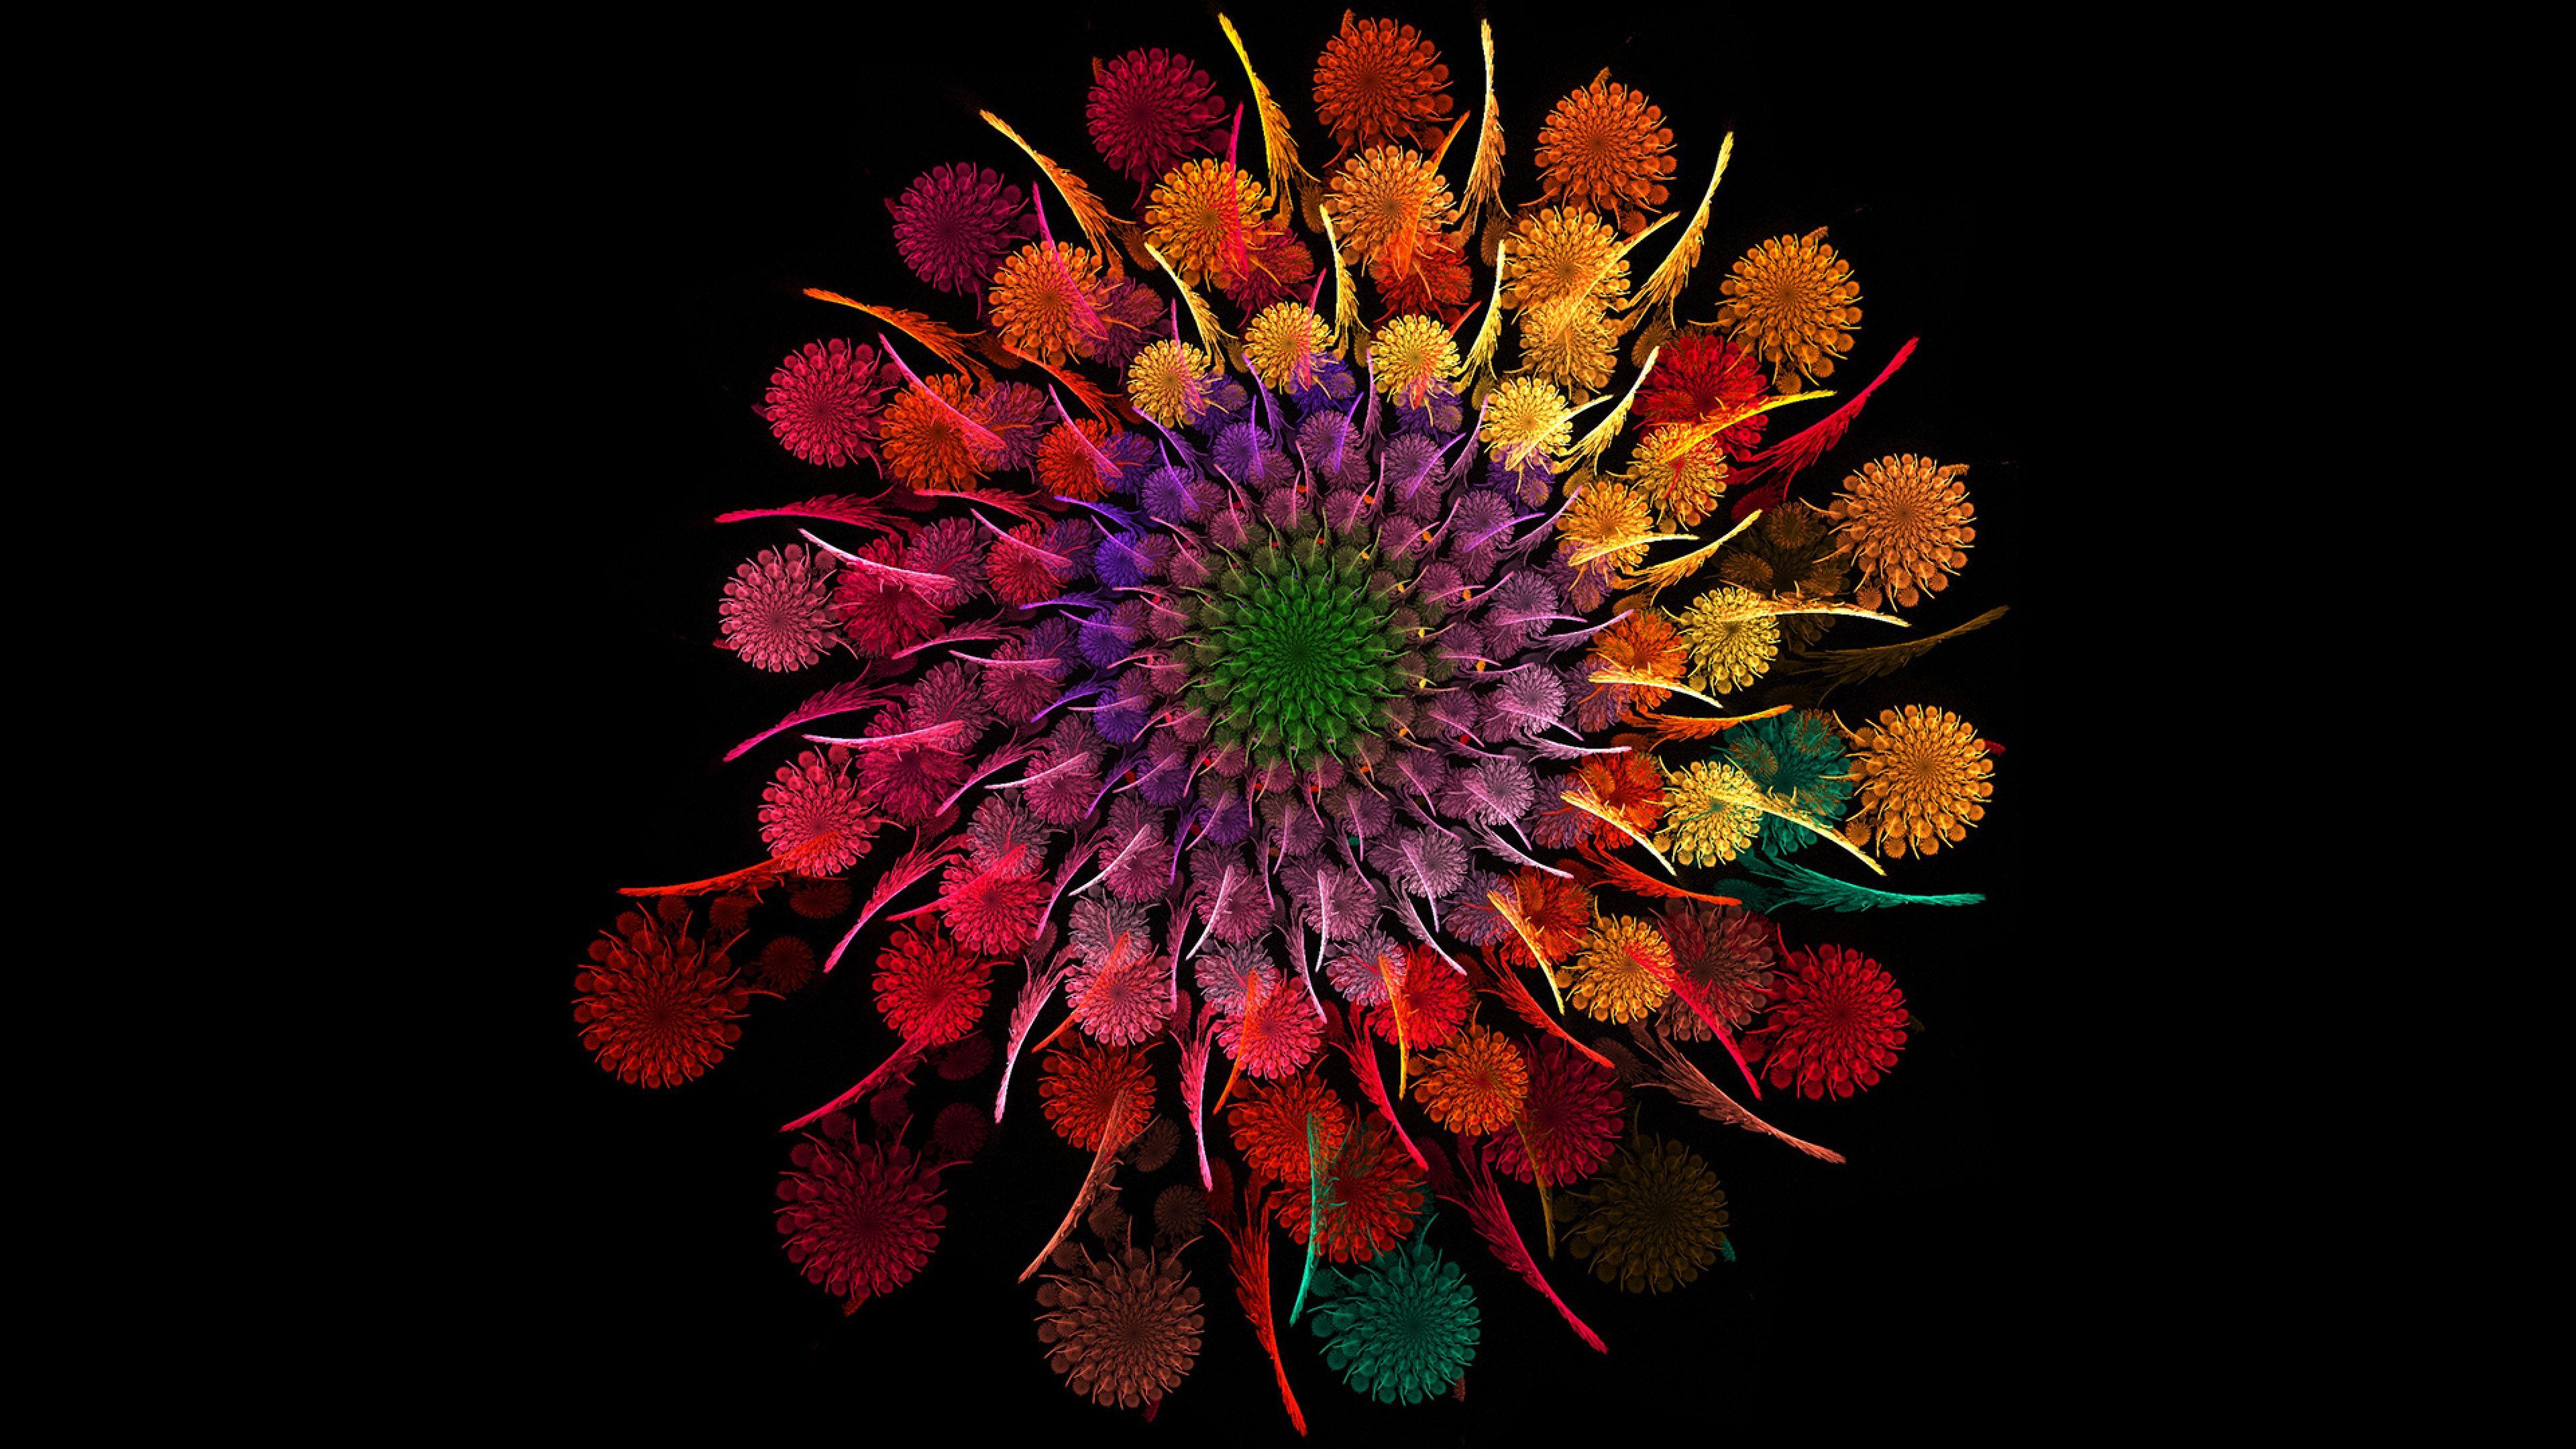 Rainbow Flower, HD Flowers, 4k Wallpaper, Image, Background